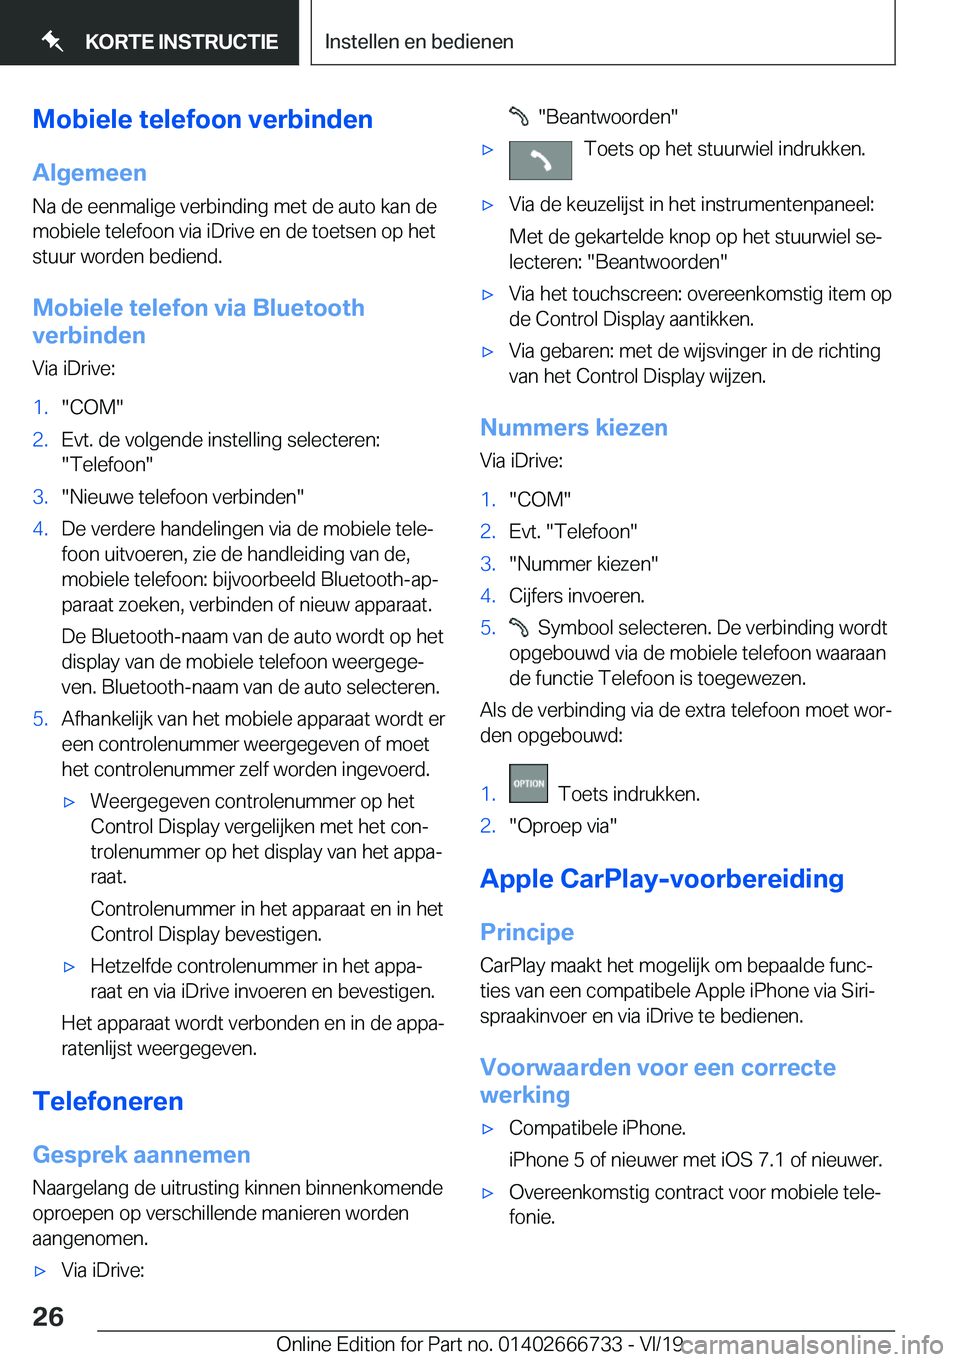 BMW M5 2020  Instructieboekjes (in Dutch) �M�o�b�i�e�l�e��t�e�l�e�f�o�o�n��v�e�r�b�i�n�d�e�n
�A�l�g�e�m�e�e�n �N�a��d�e��e�e�n�m�a�l�i�g�e��v�e�r�b�i�n�d�i�n�g��m�e�t��d�e��a�u�t�o��k�a�n��d�e�m�o�b�i�e�l�e��t�e�l�e�f�o�o�n��v�i�a